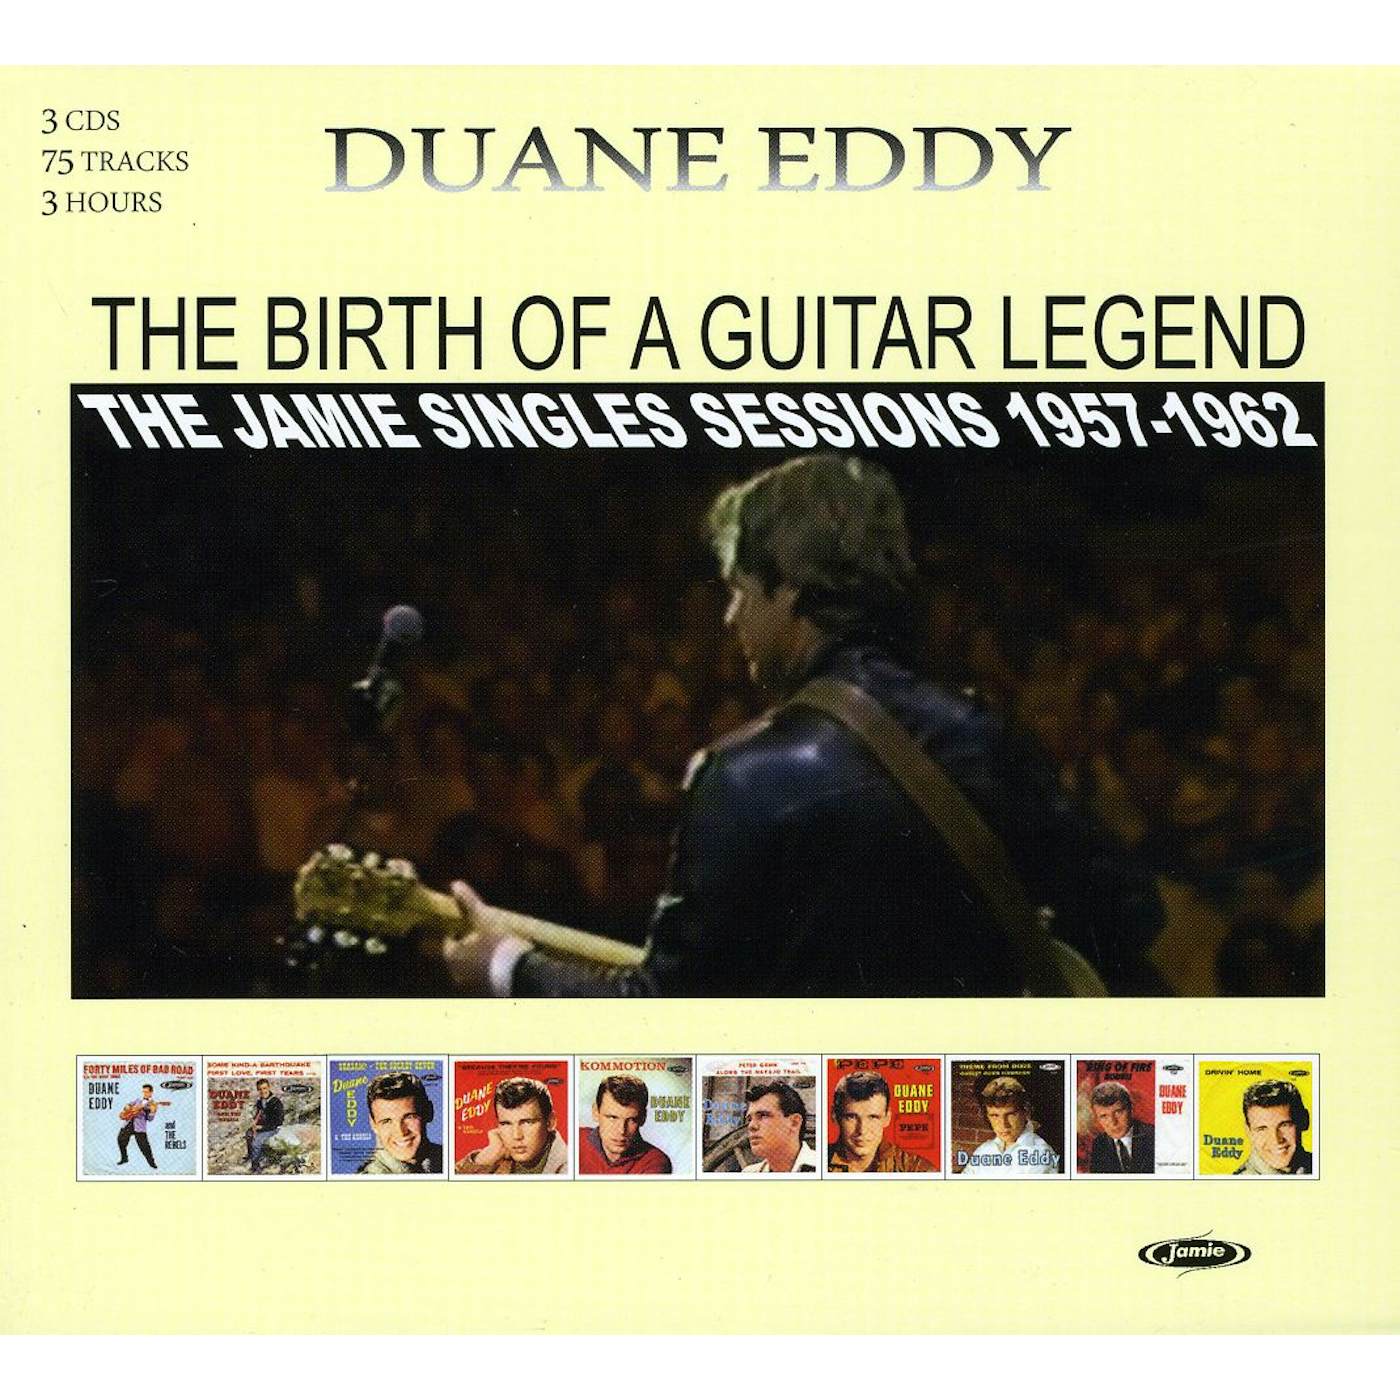 Eddy Duane JAMIE SINGLES SESSIONS CD